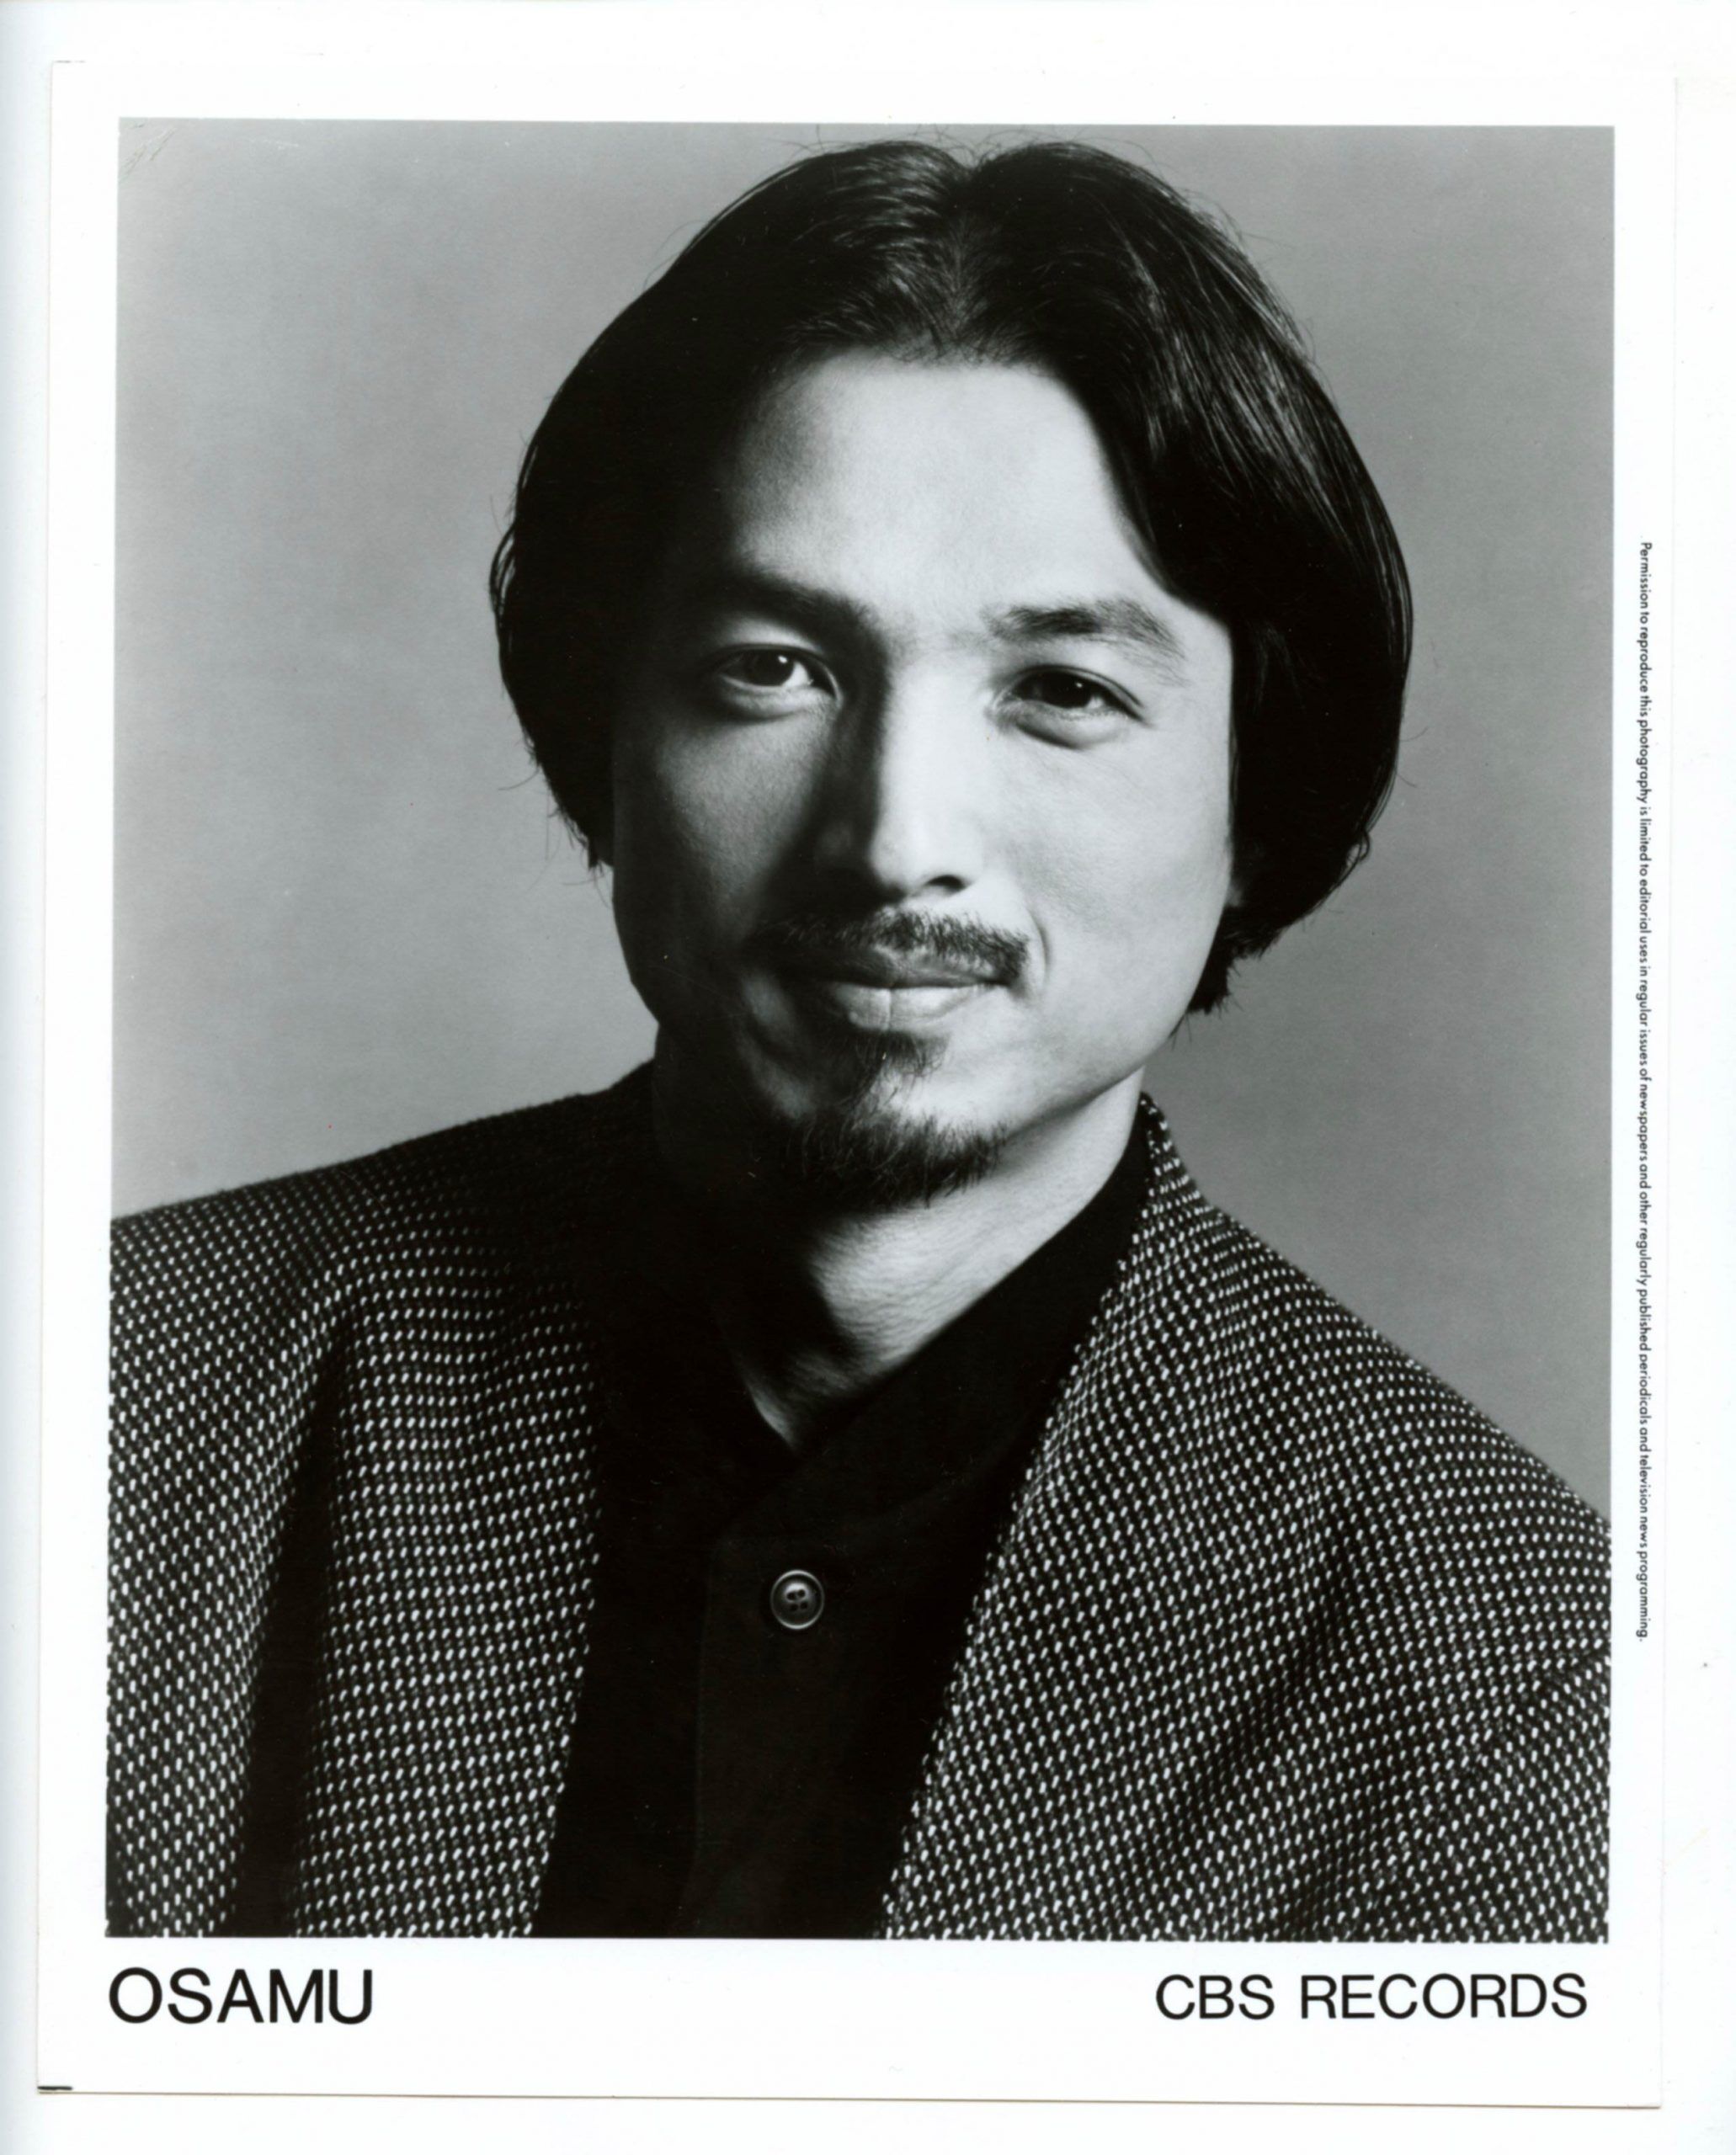 Osamu Kitajima Photo 1980s CBS Records